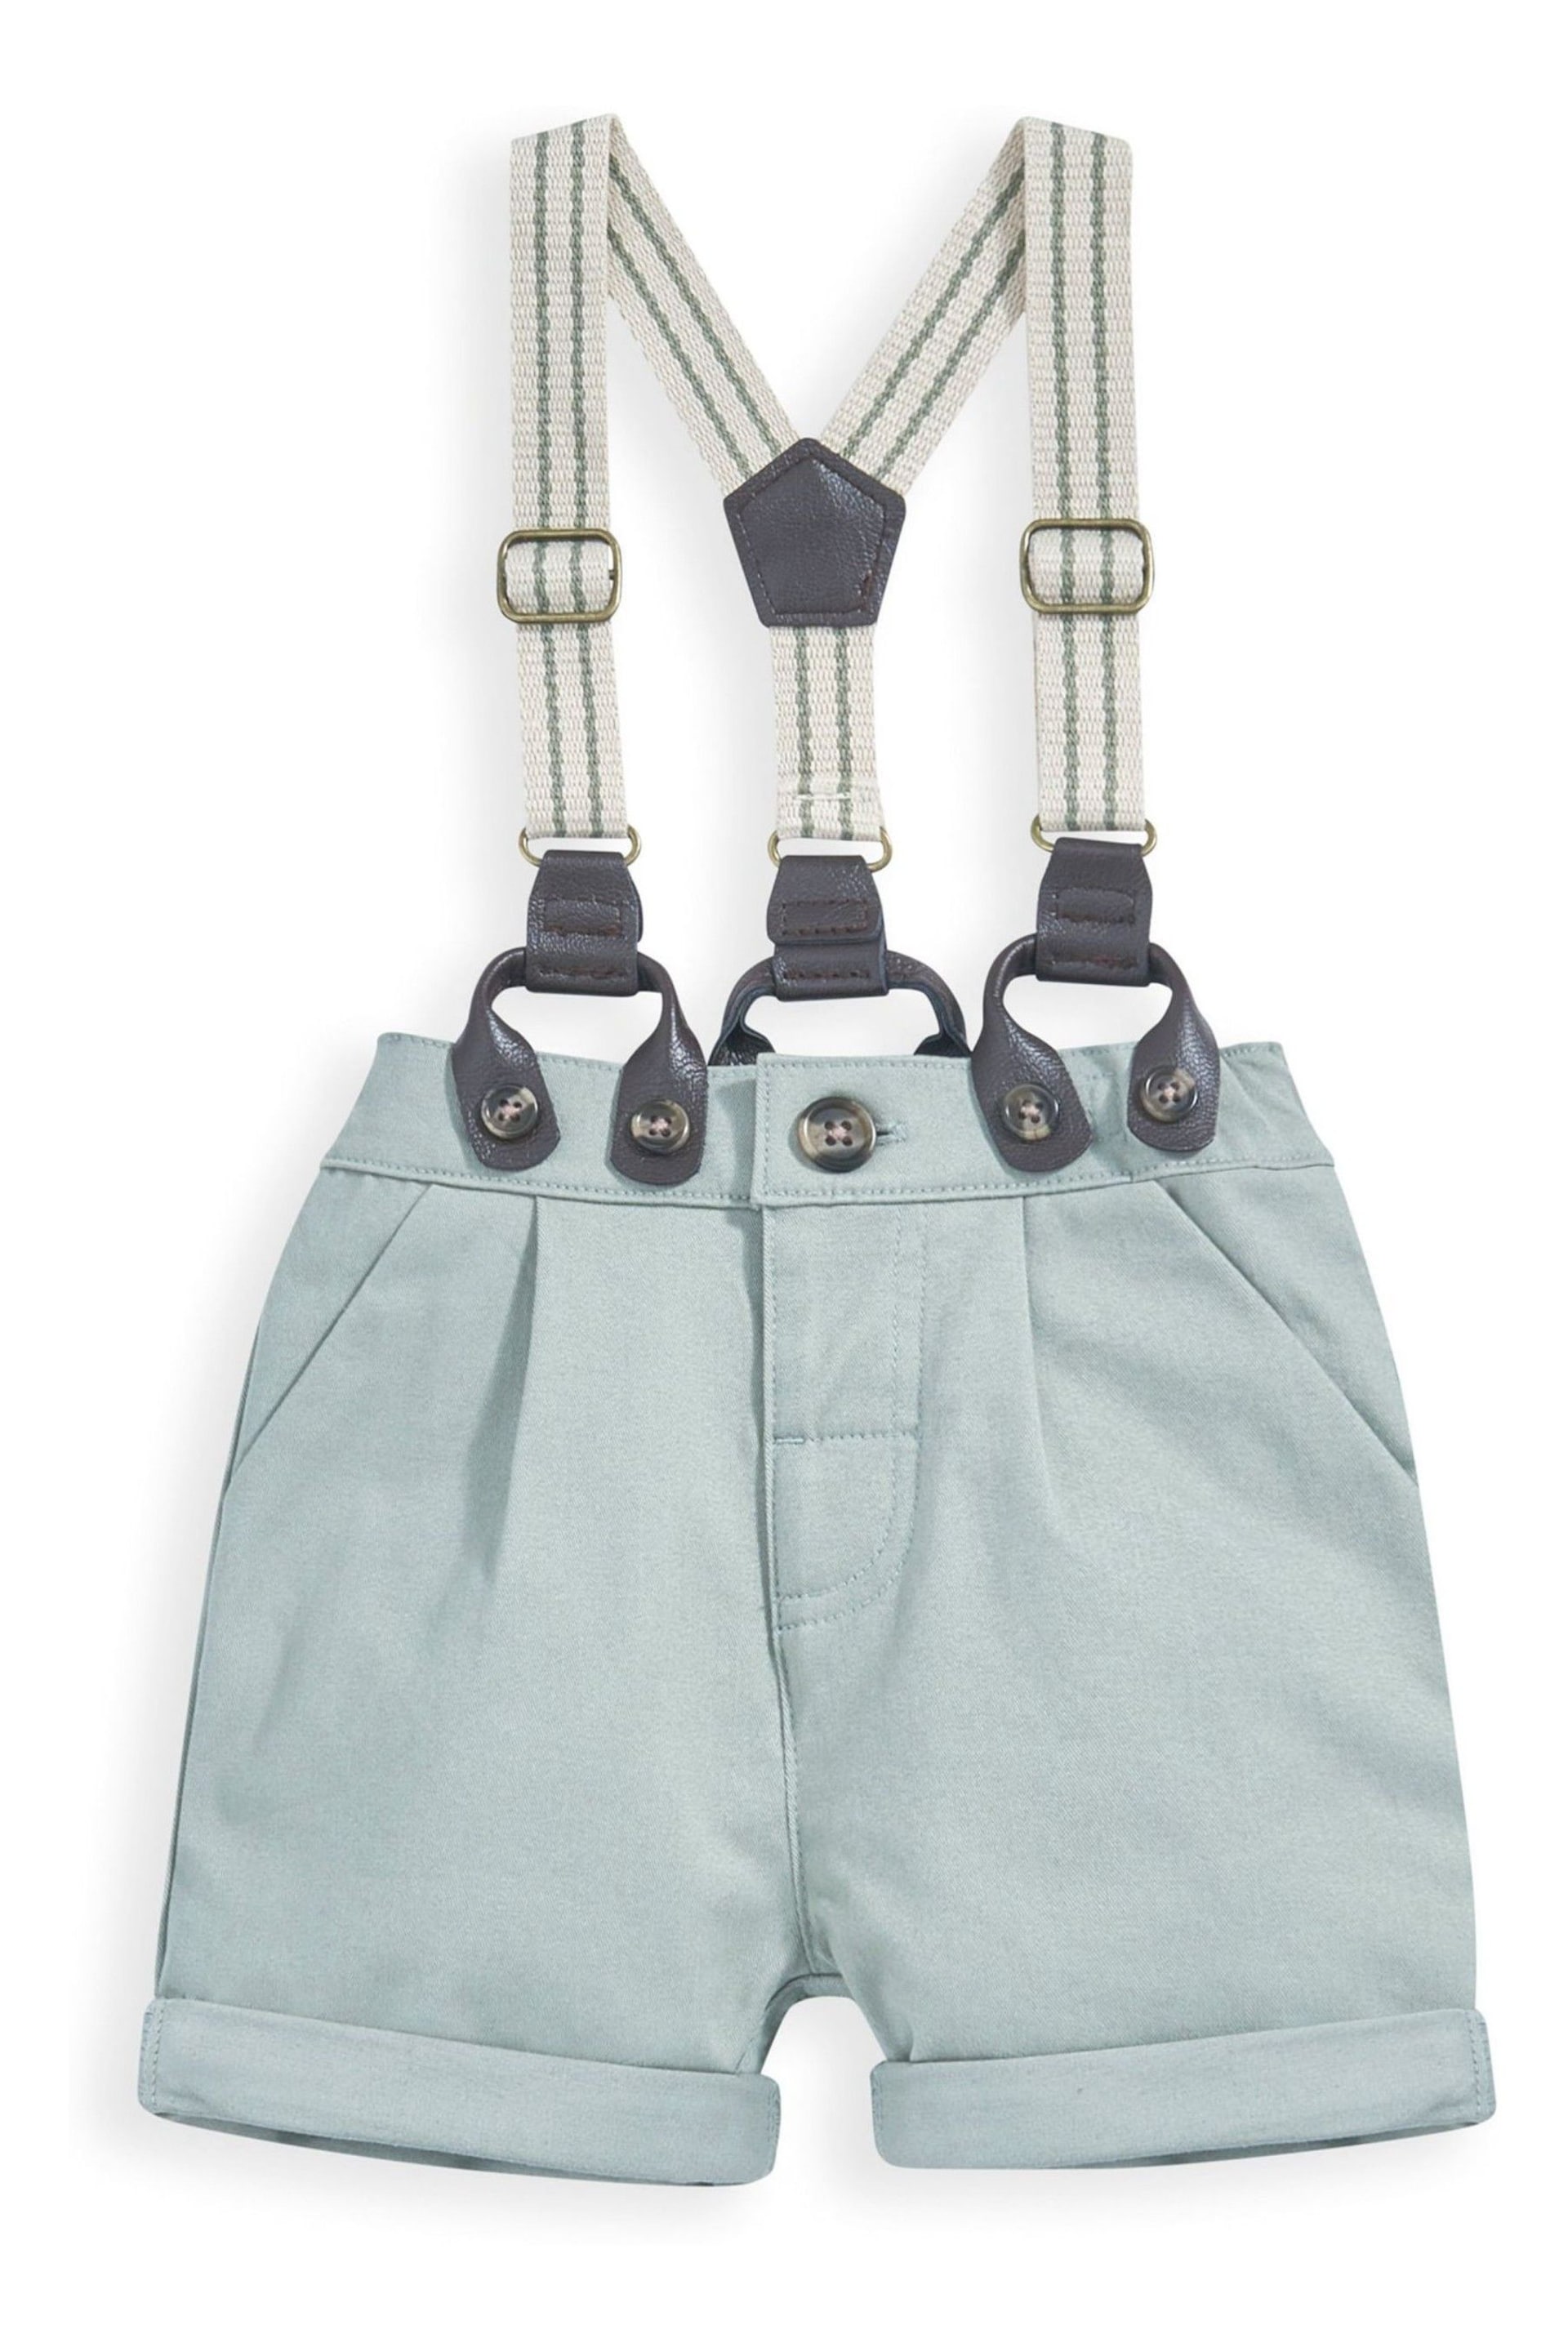 Mamas & Papas Green Chinos Shorts With Stripe Braces - Image 2 of 4